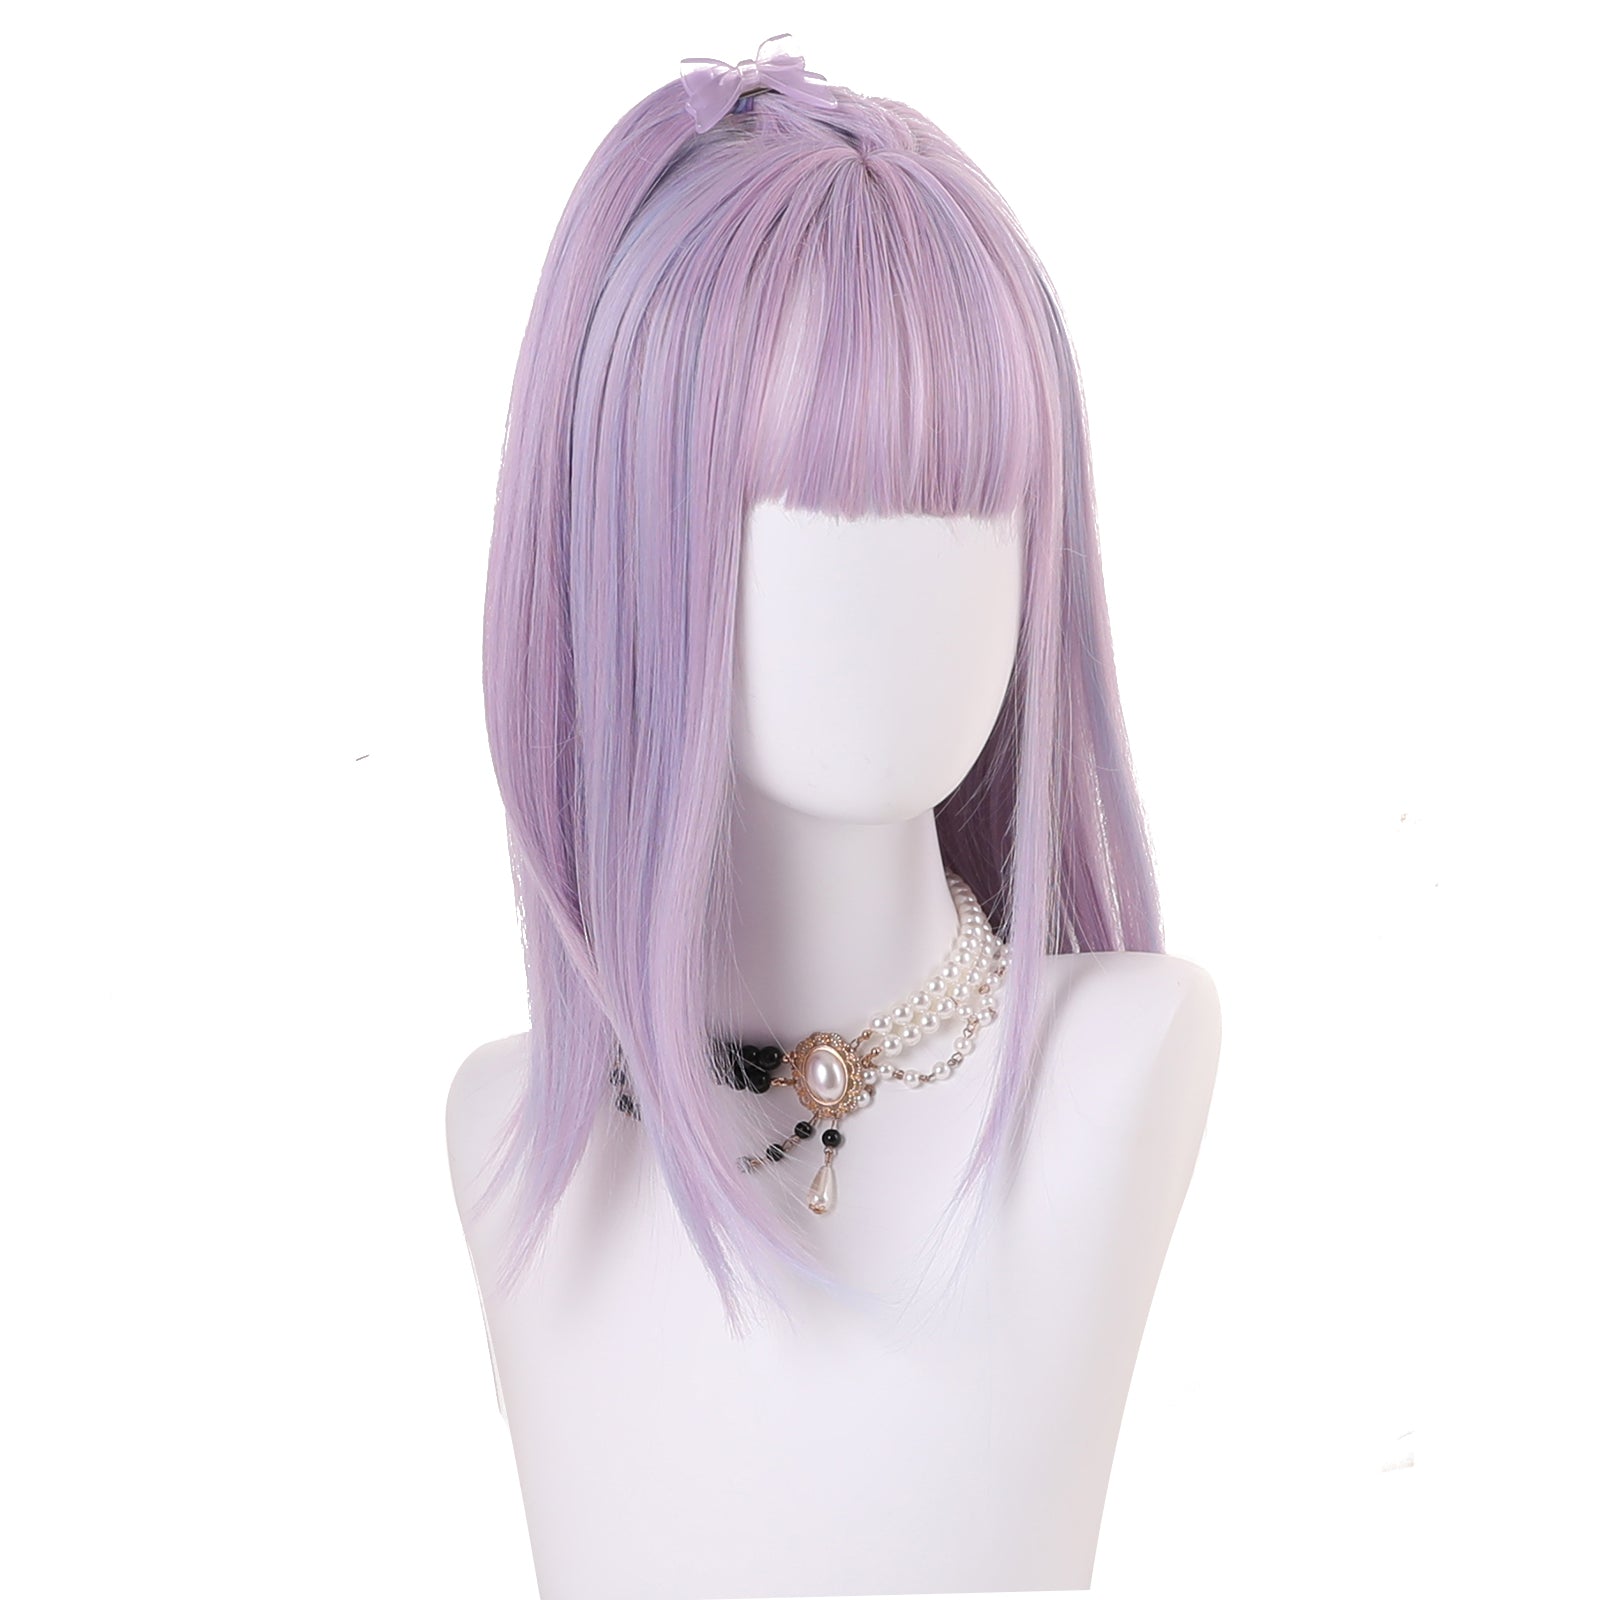 Rulercosplay Rainbow Candy Wigs Blue and purple Medium Lolita Wig